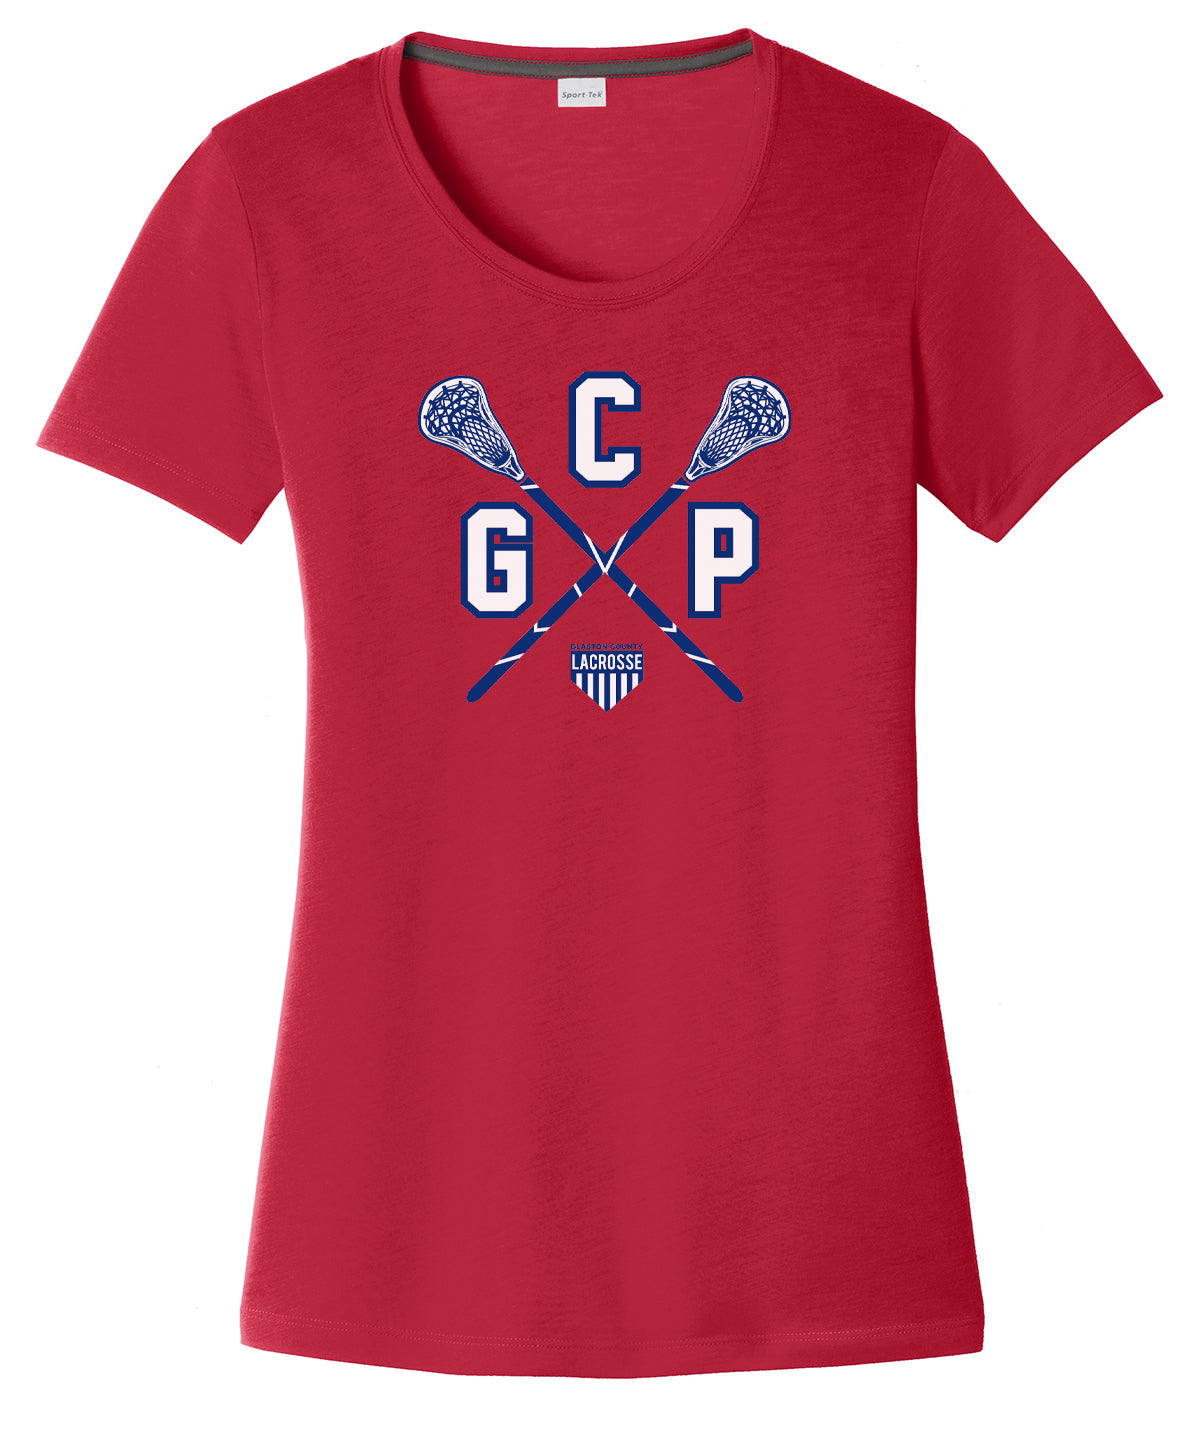 GCP Lacrosse Women's Red CottonTouch Performance T-Shirt